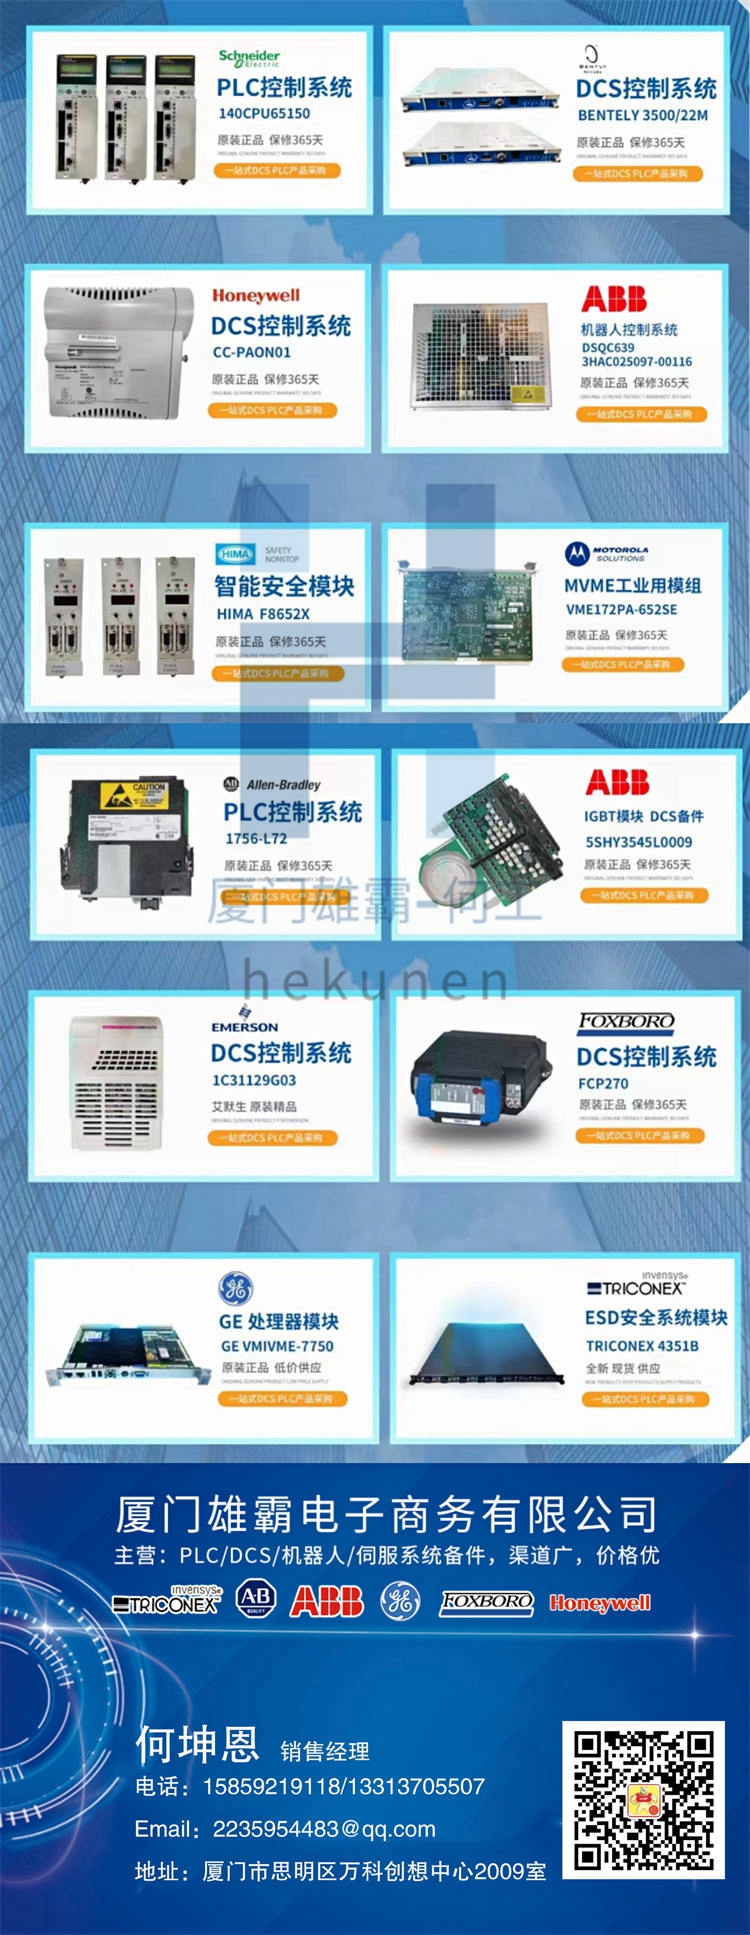 CI854K01 PLC控制器ABB 输入输出模块-备件销售 